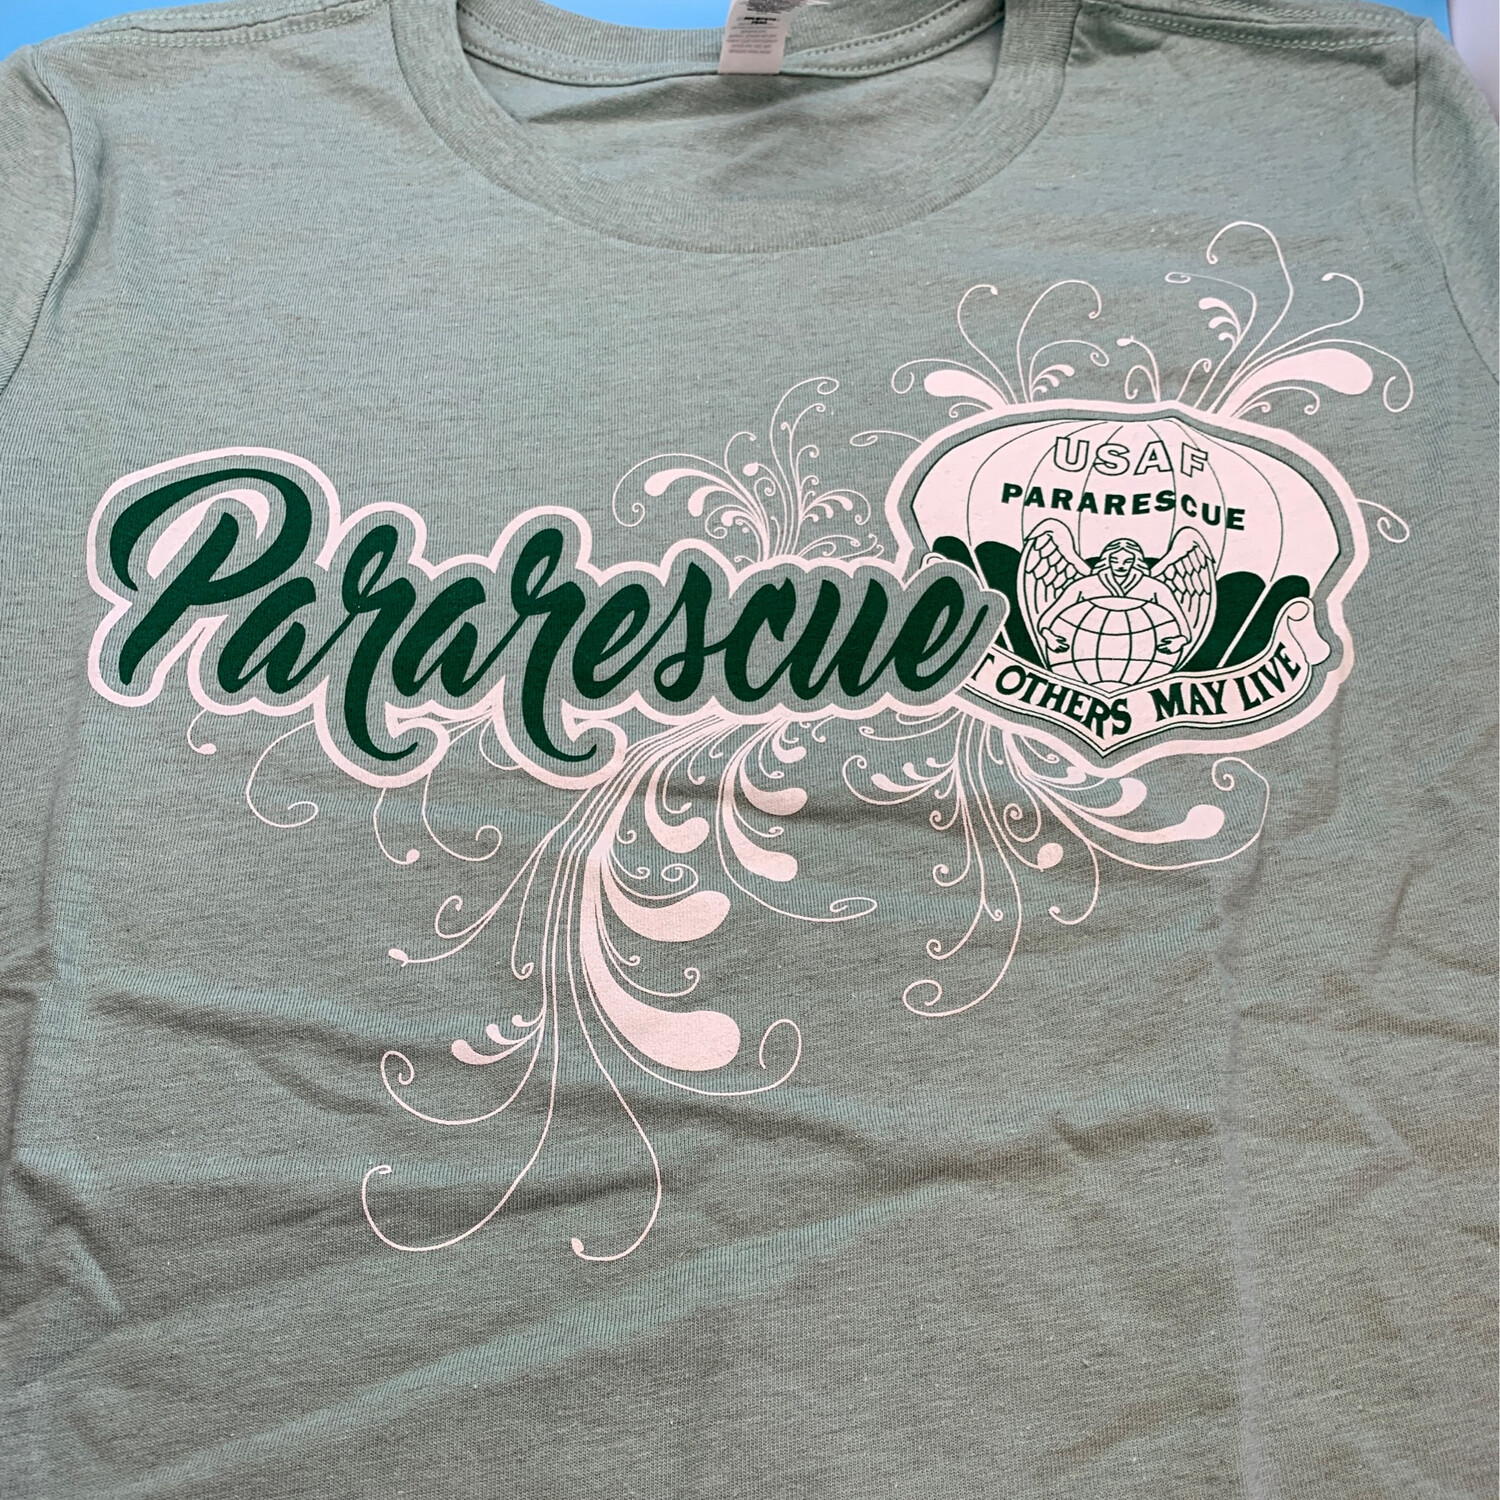 Pja/ T-Shirt Light Green Ladies, Pararescue With PJ Flash